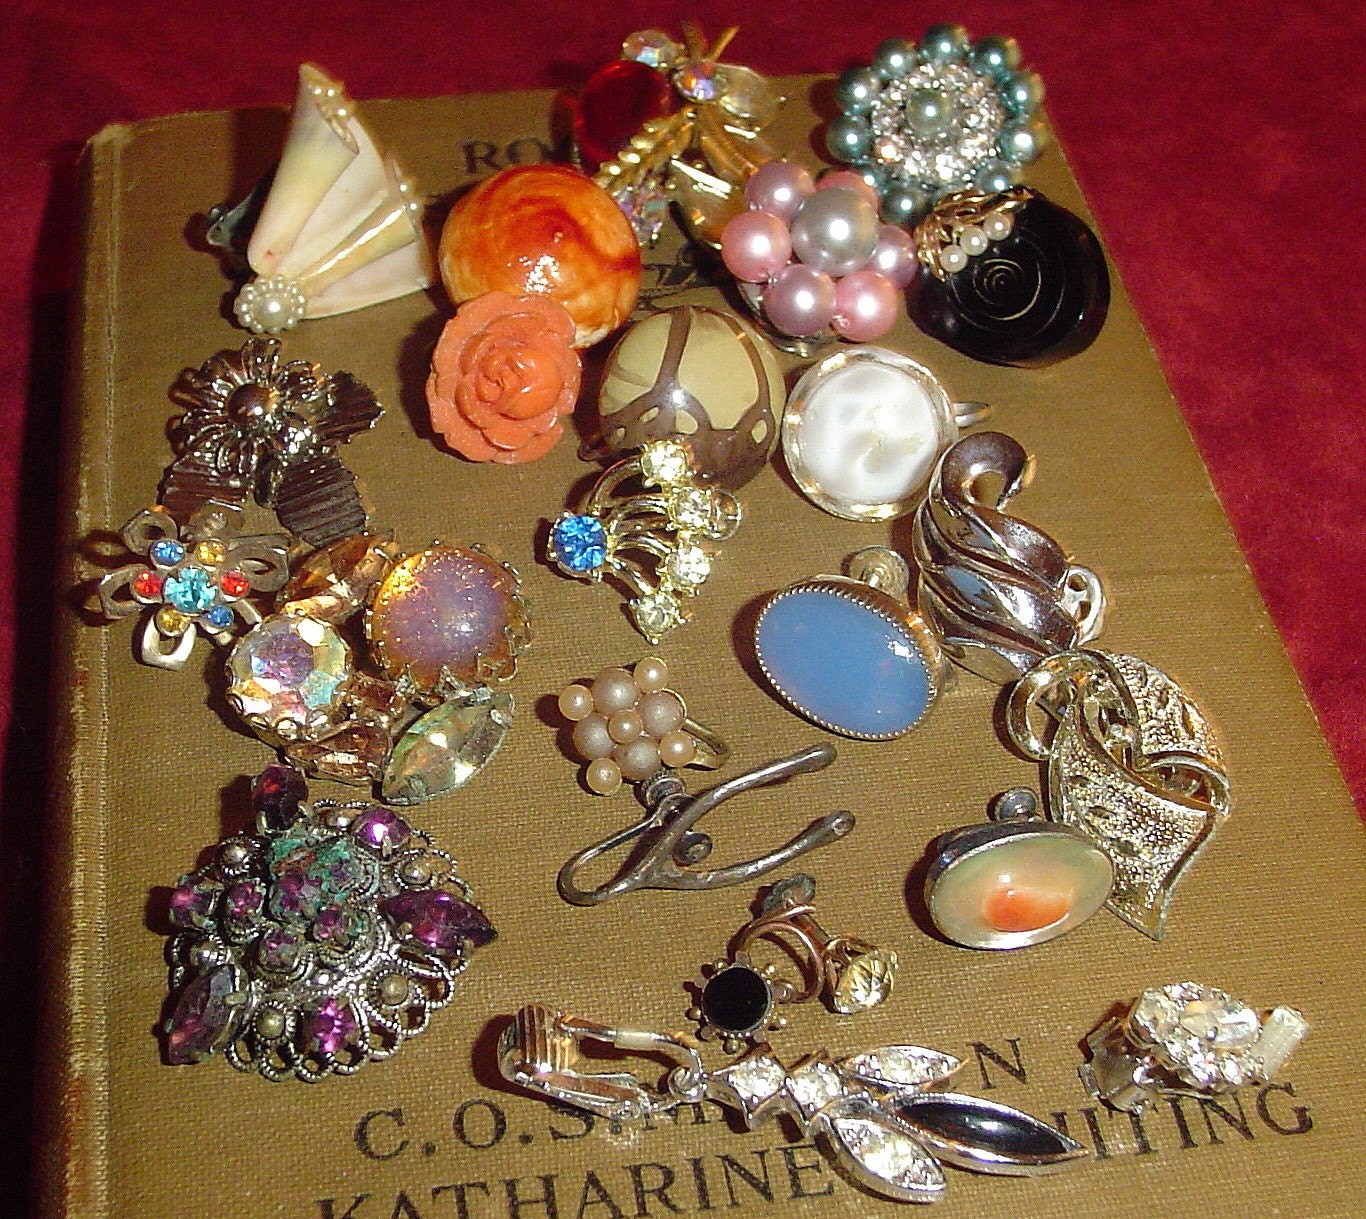 Lot of 22 single vintage earrings for your repurposing joy